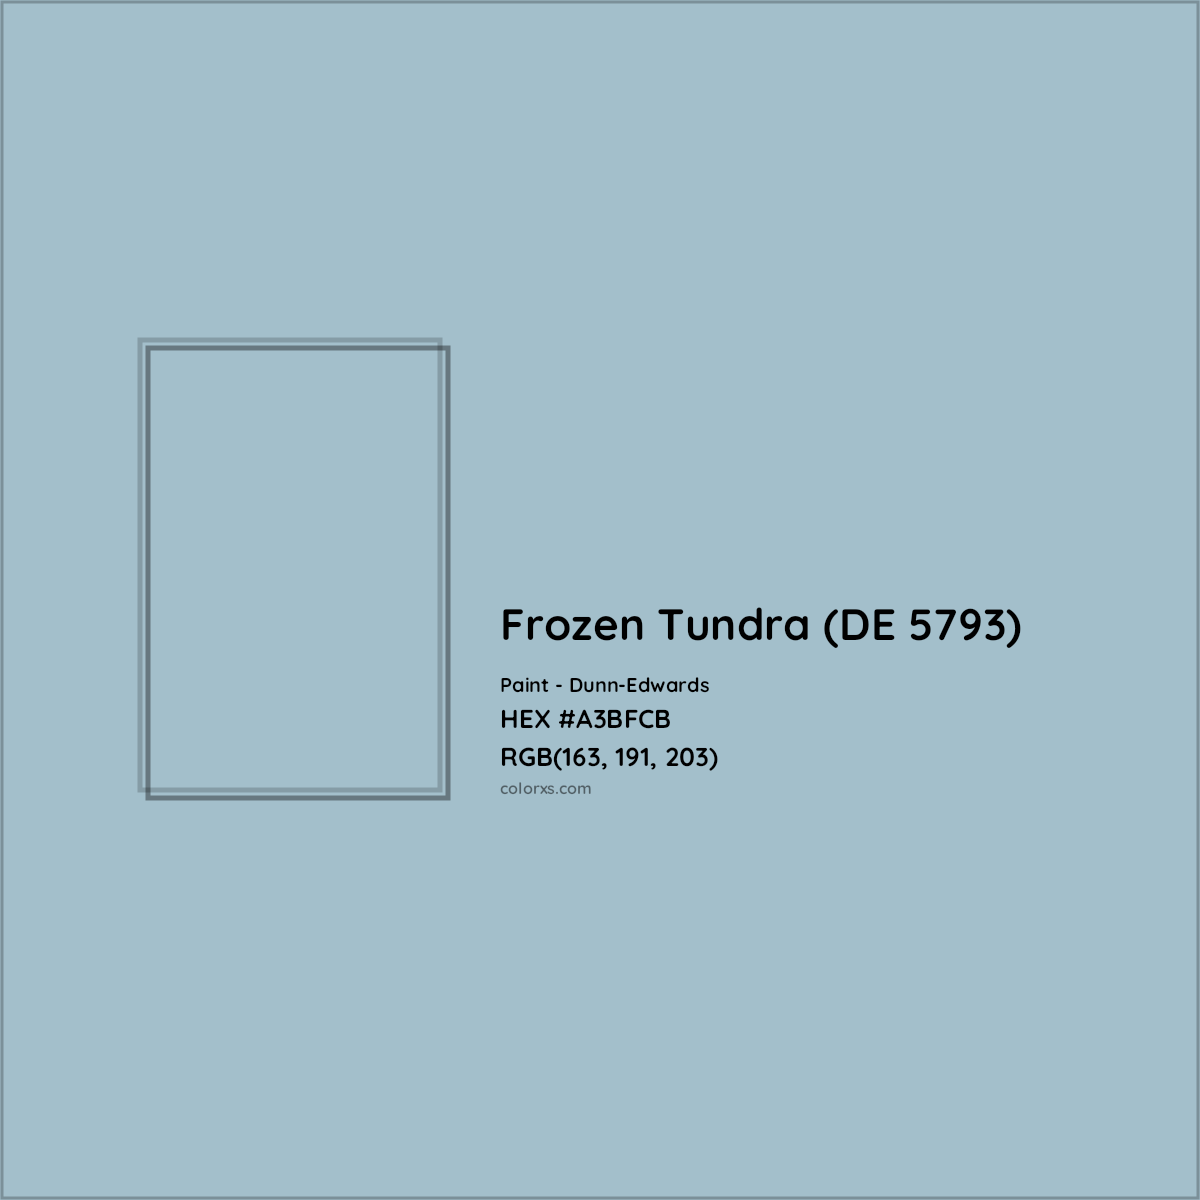 HEX #A3BFCB Frozen Tundra (DE 5793) Paint Dunn-Edwards - Color Code